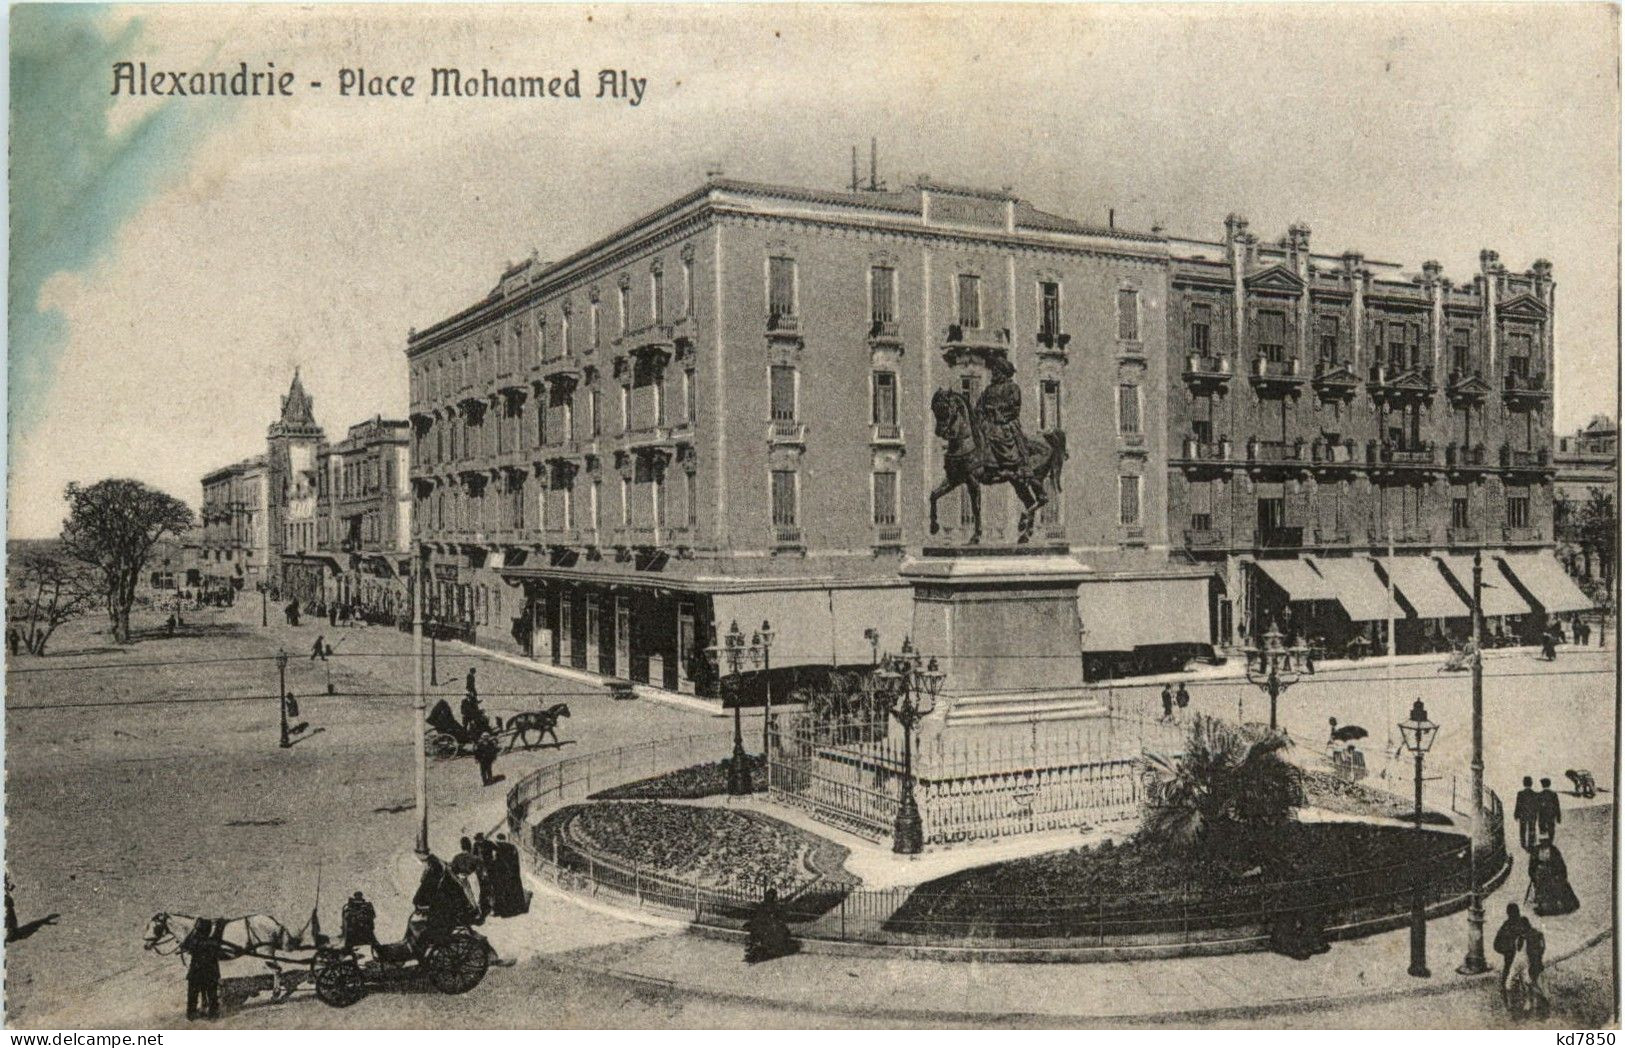 Alexandria - Place Mohamed Aly - Alexandrië